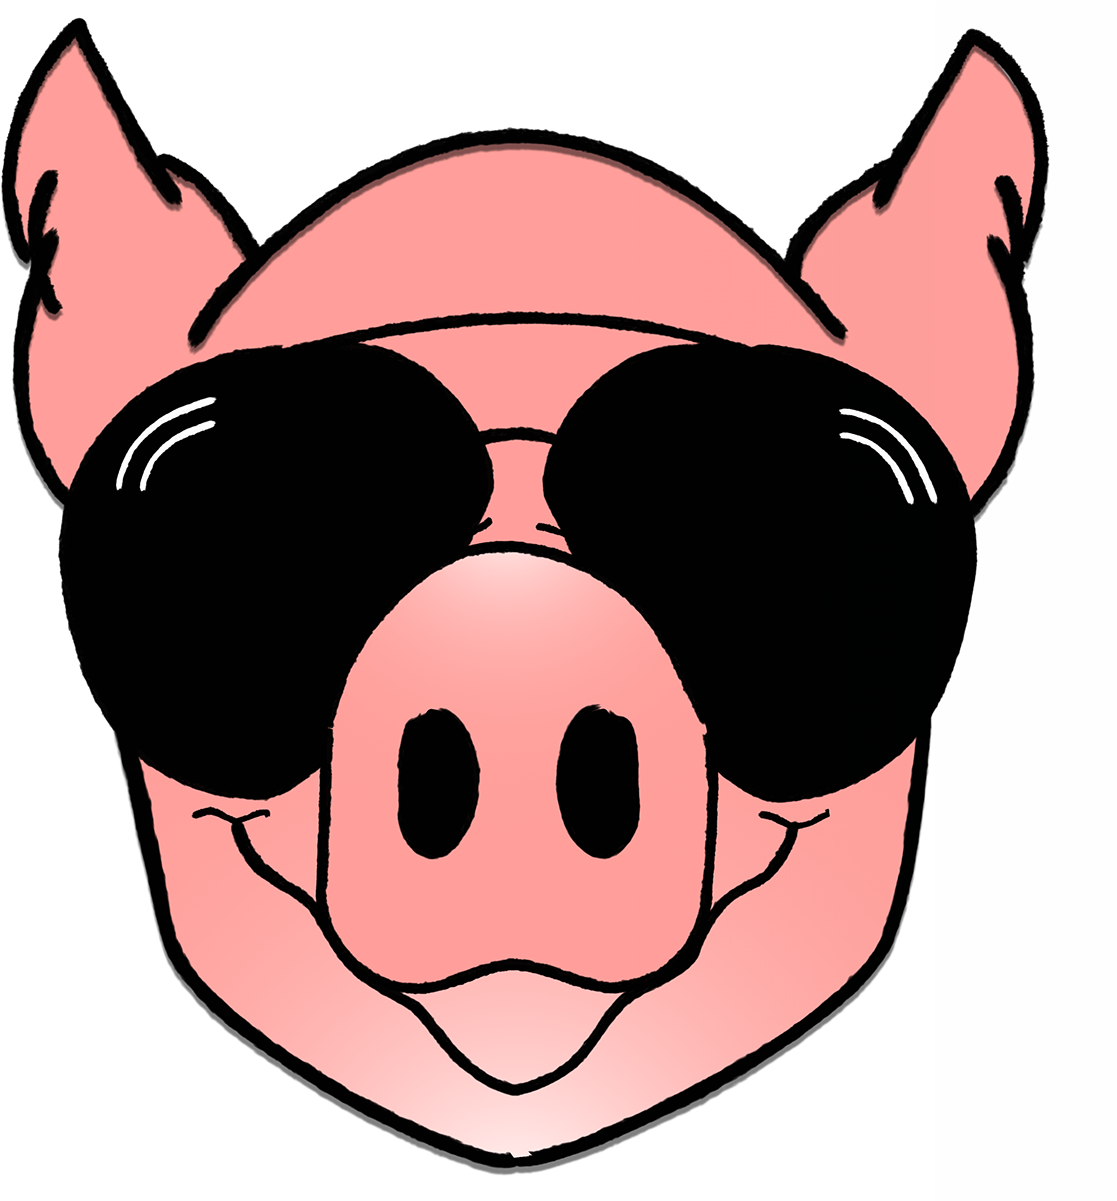 A Cartoon Pig Wearing Sunglasses